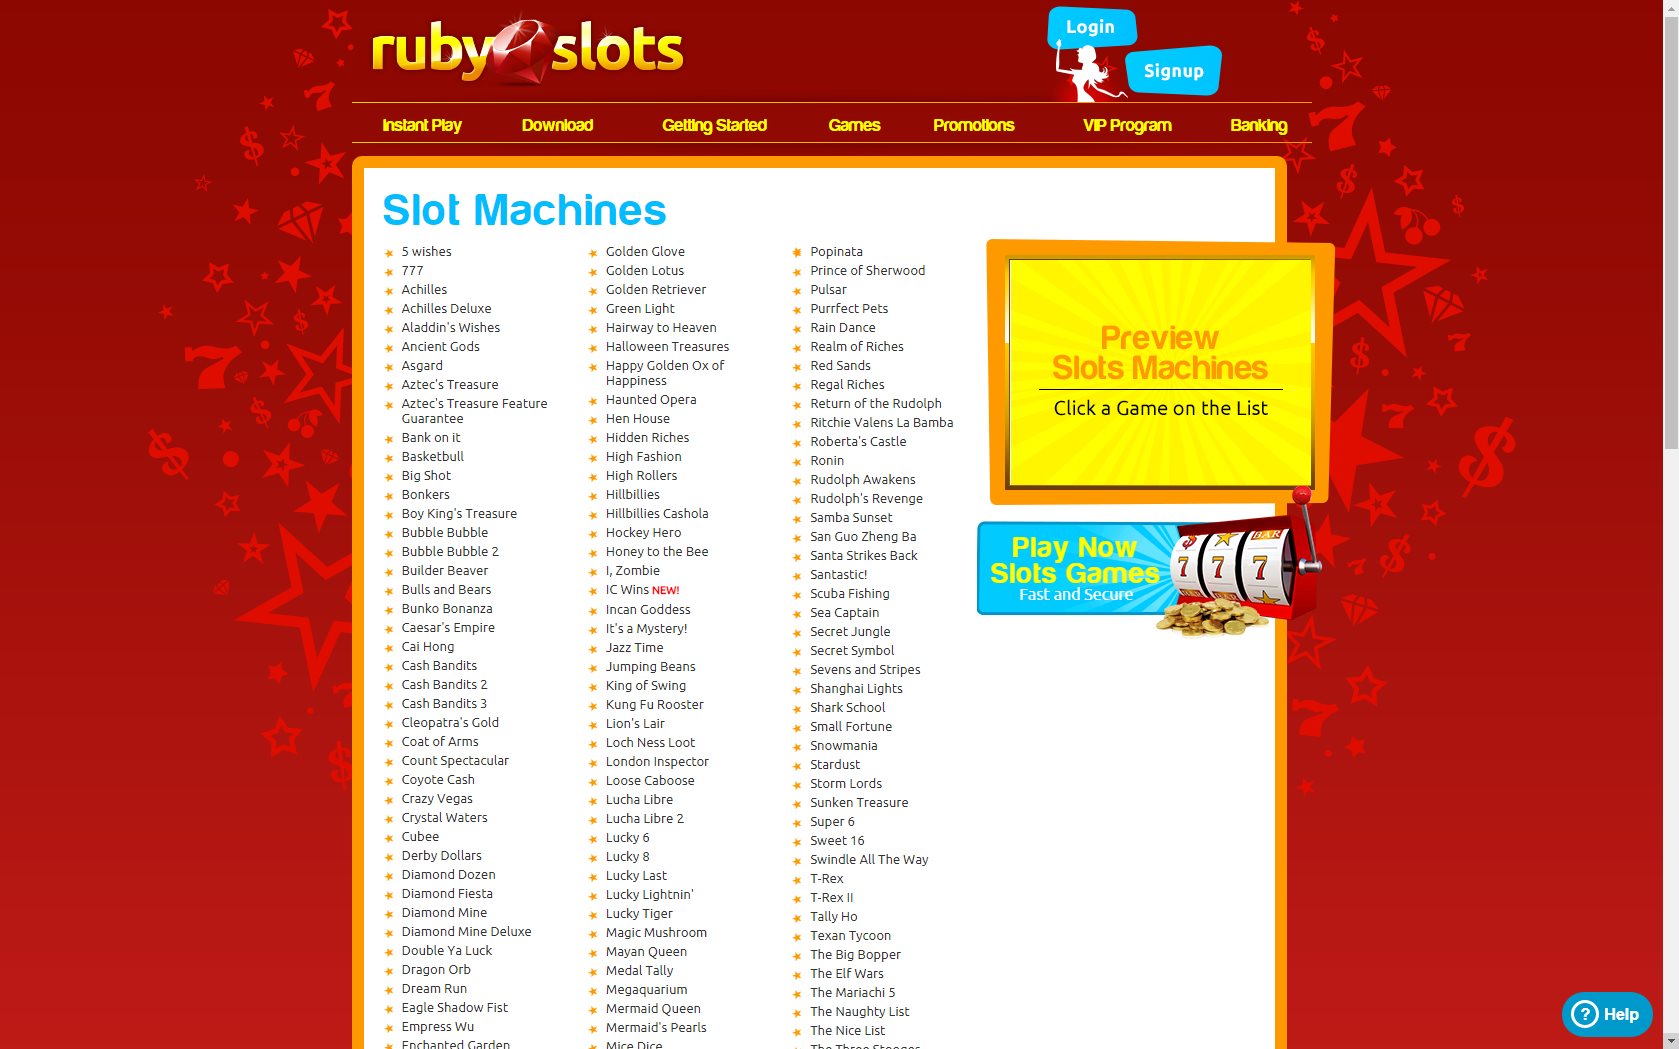 Ruby Slots Casino Games